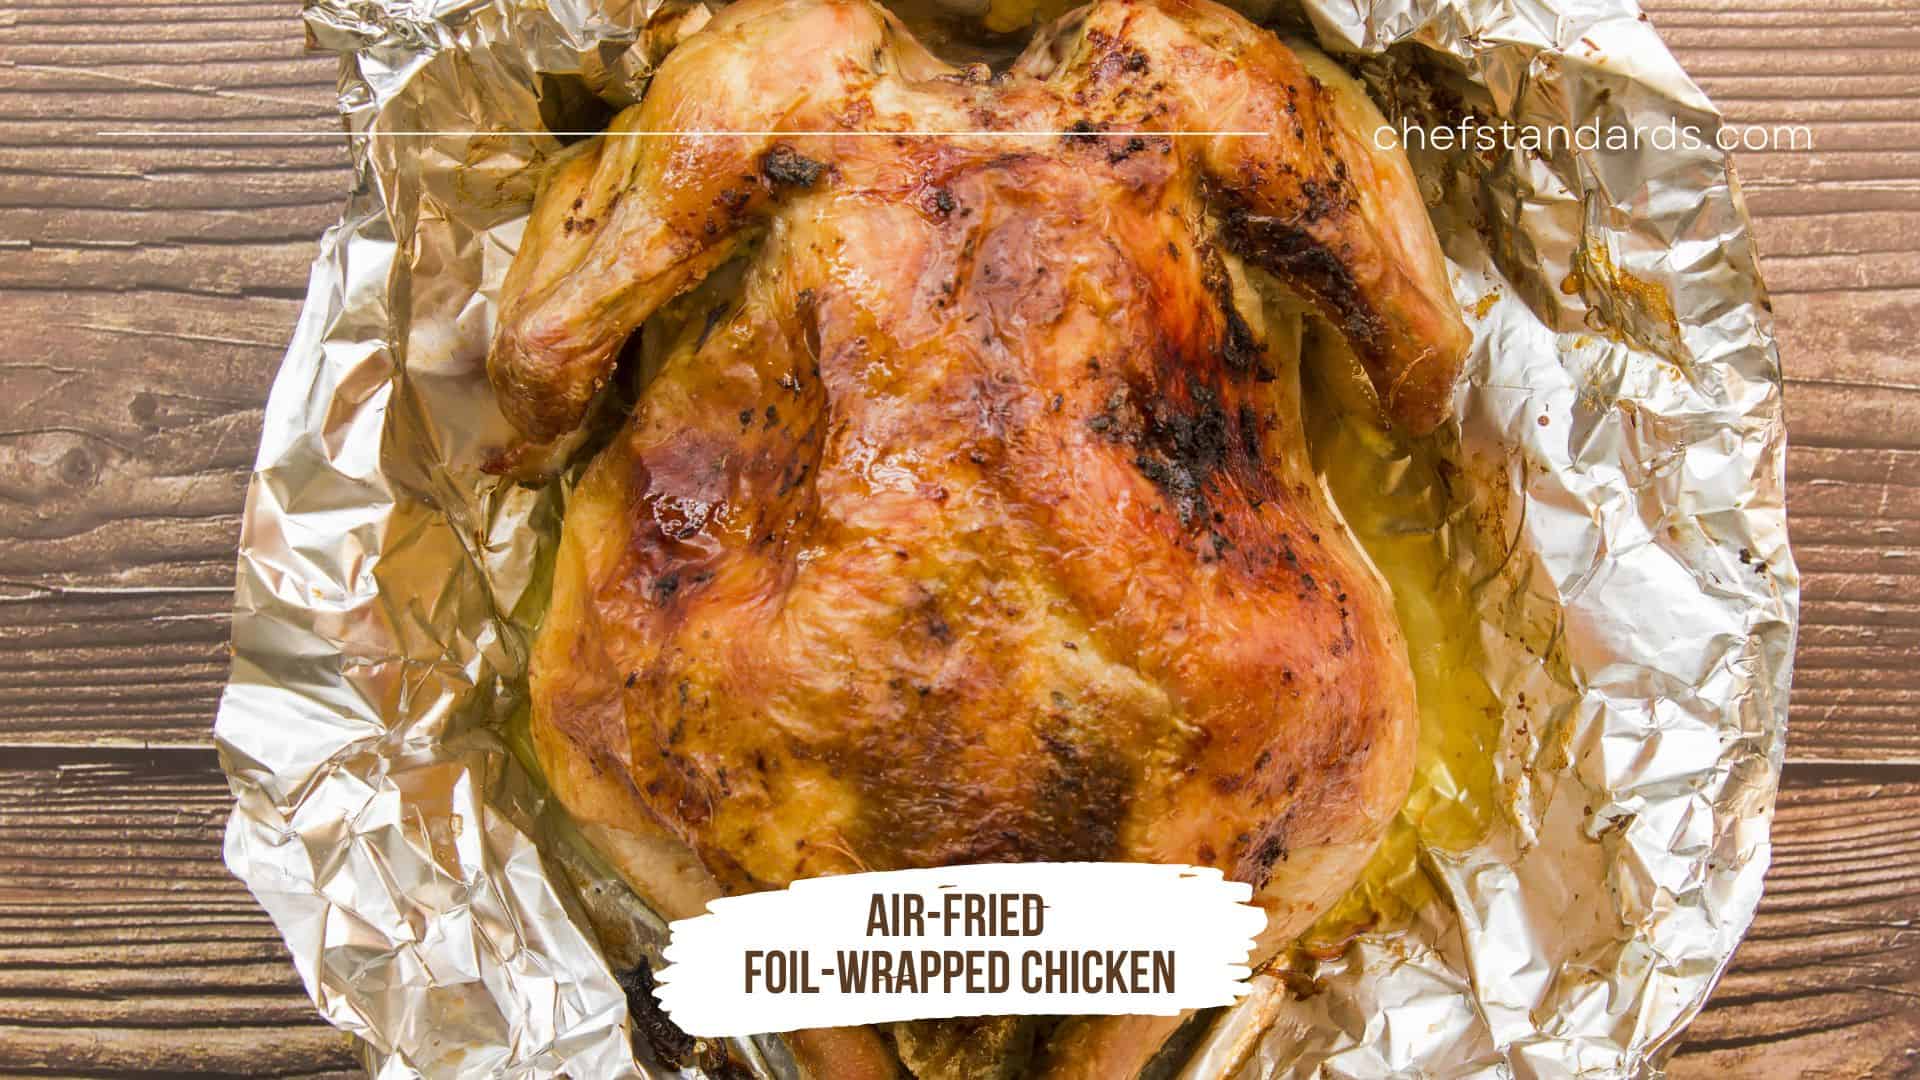 Chicken in foil